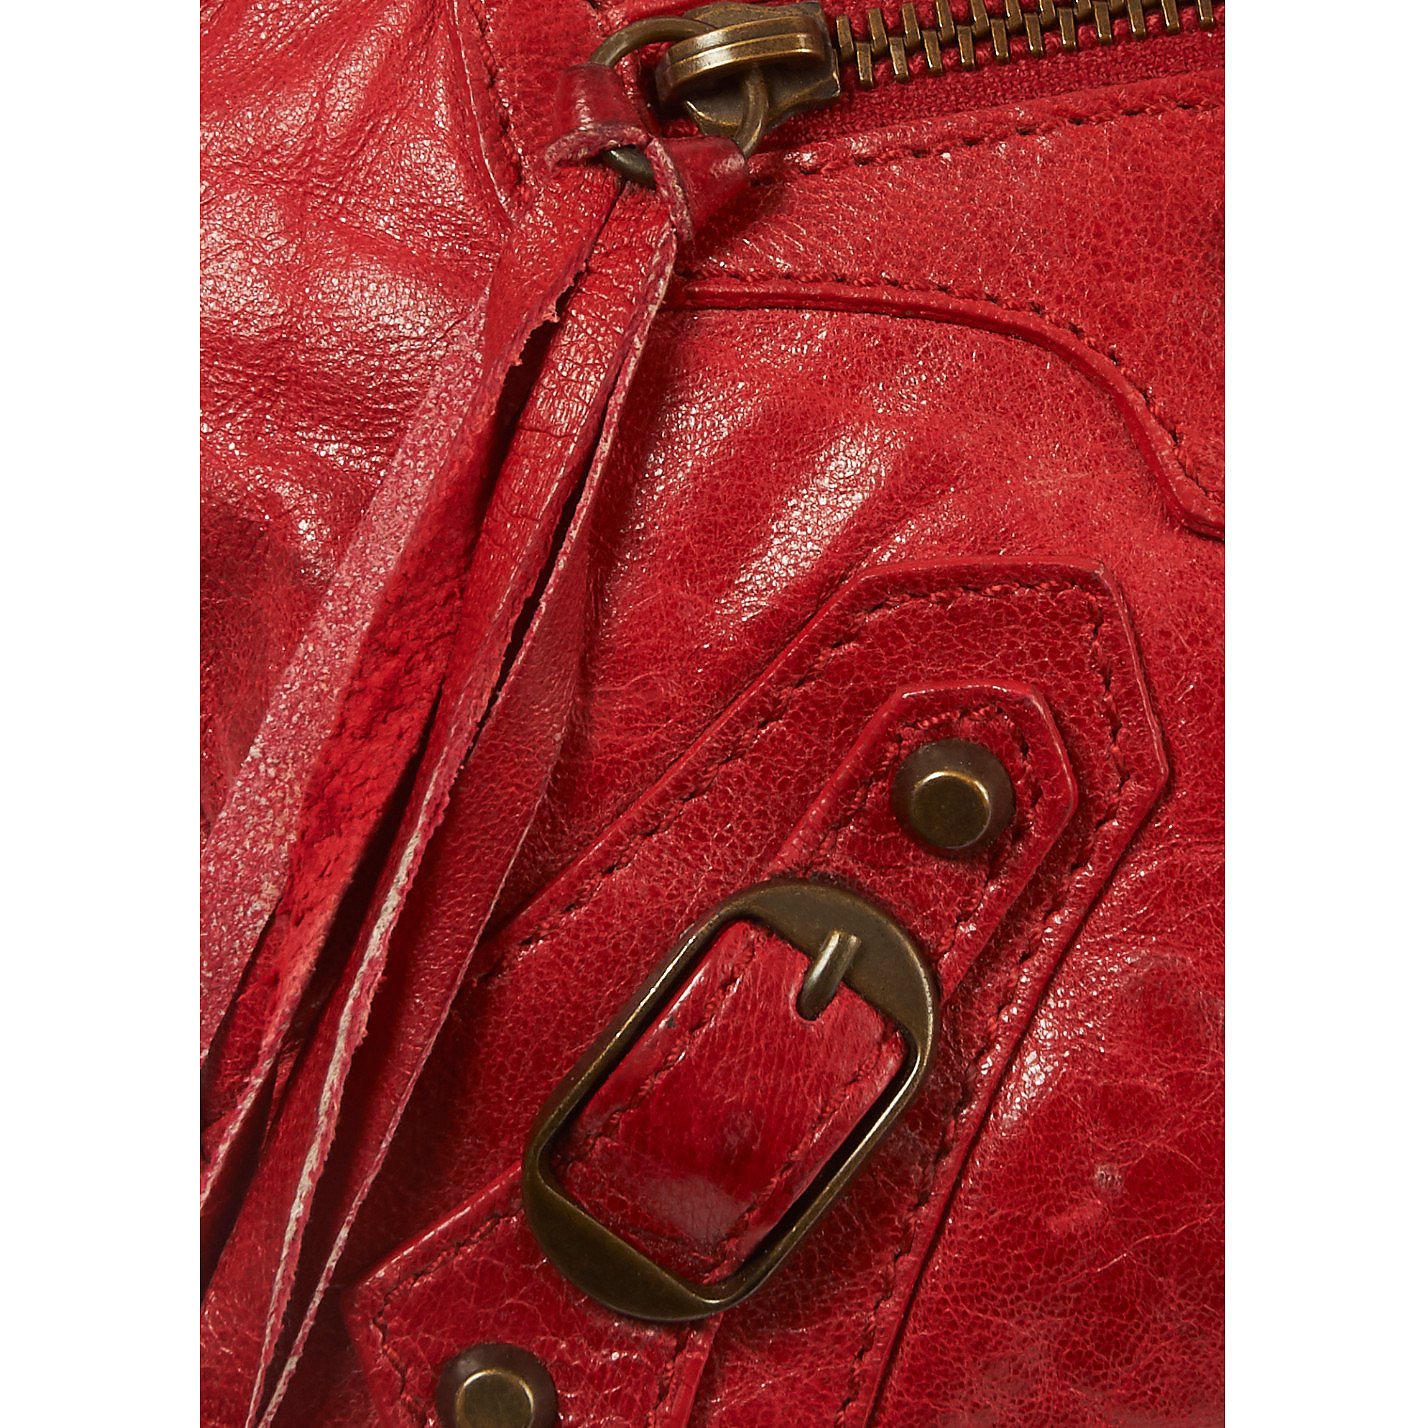 Balenciaga Leather Clutch Bag